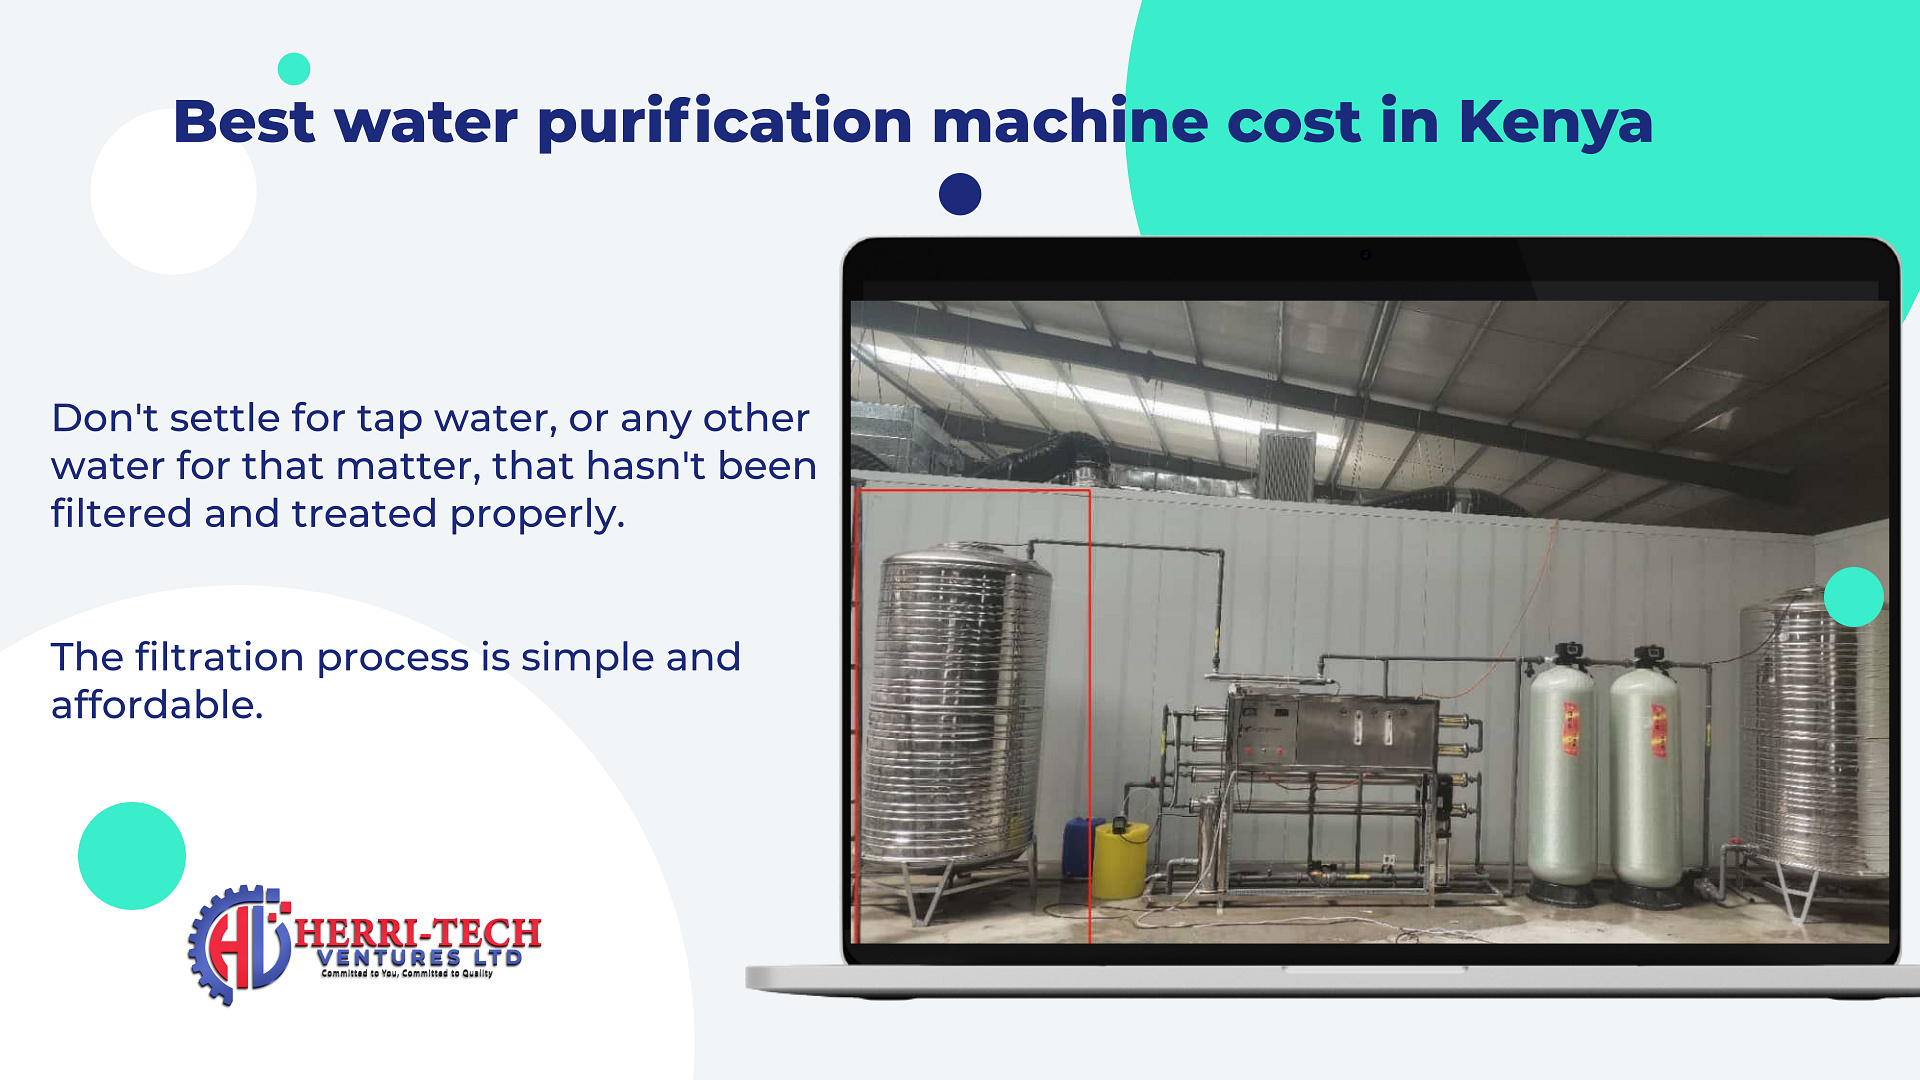 BEST WATER PURIFICATION MACHINE COST IN KENYA